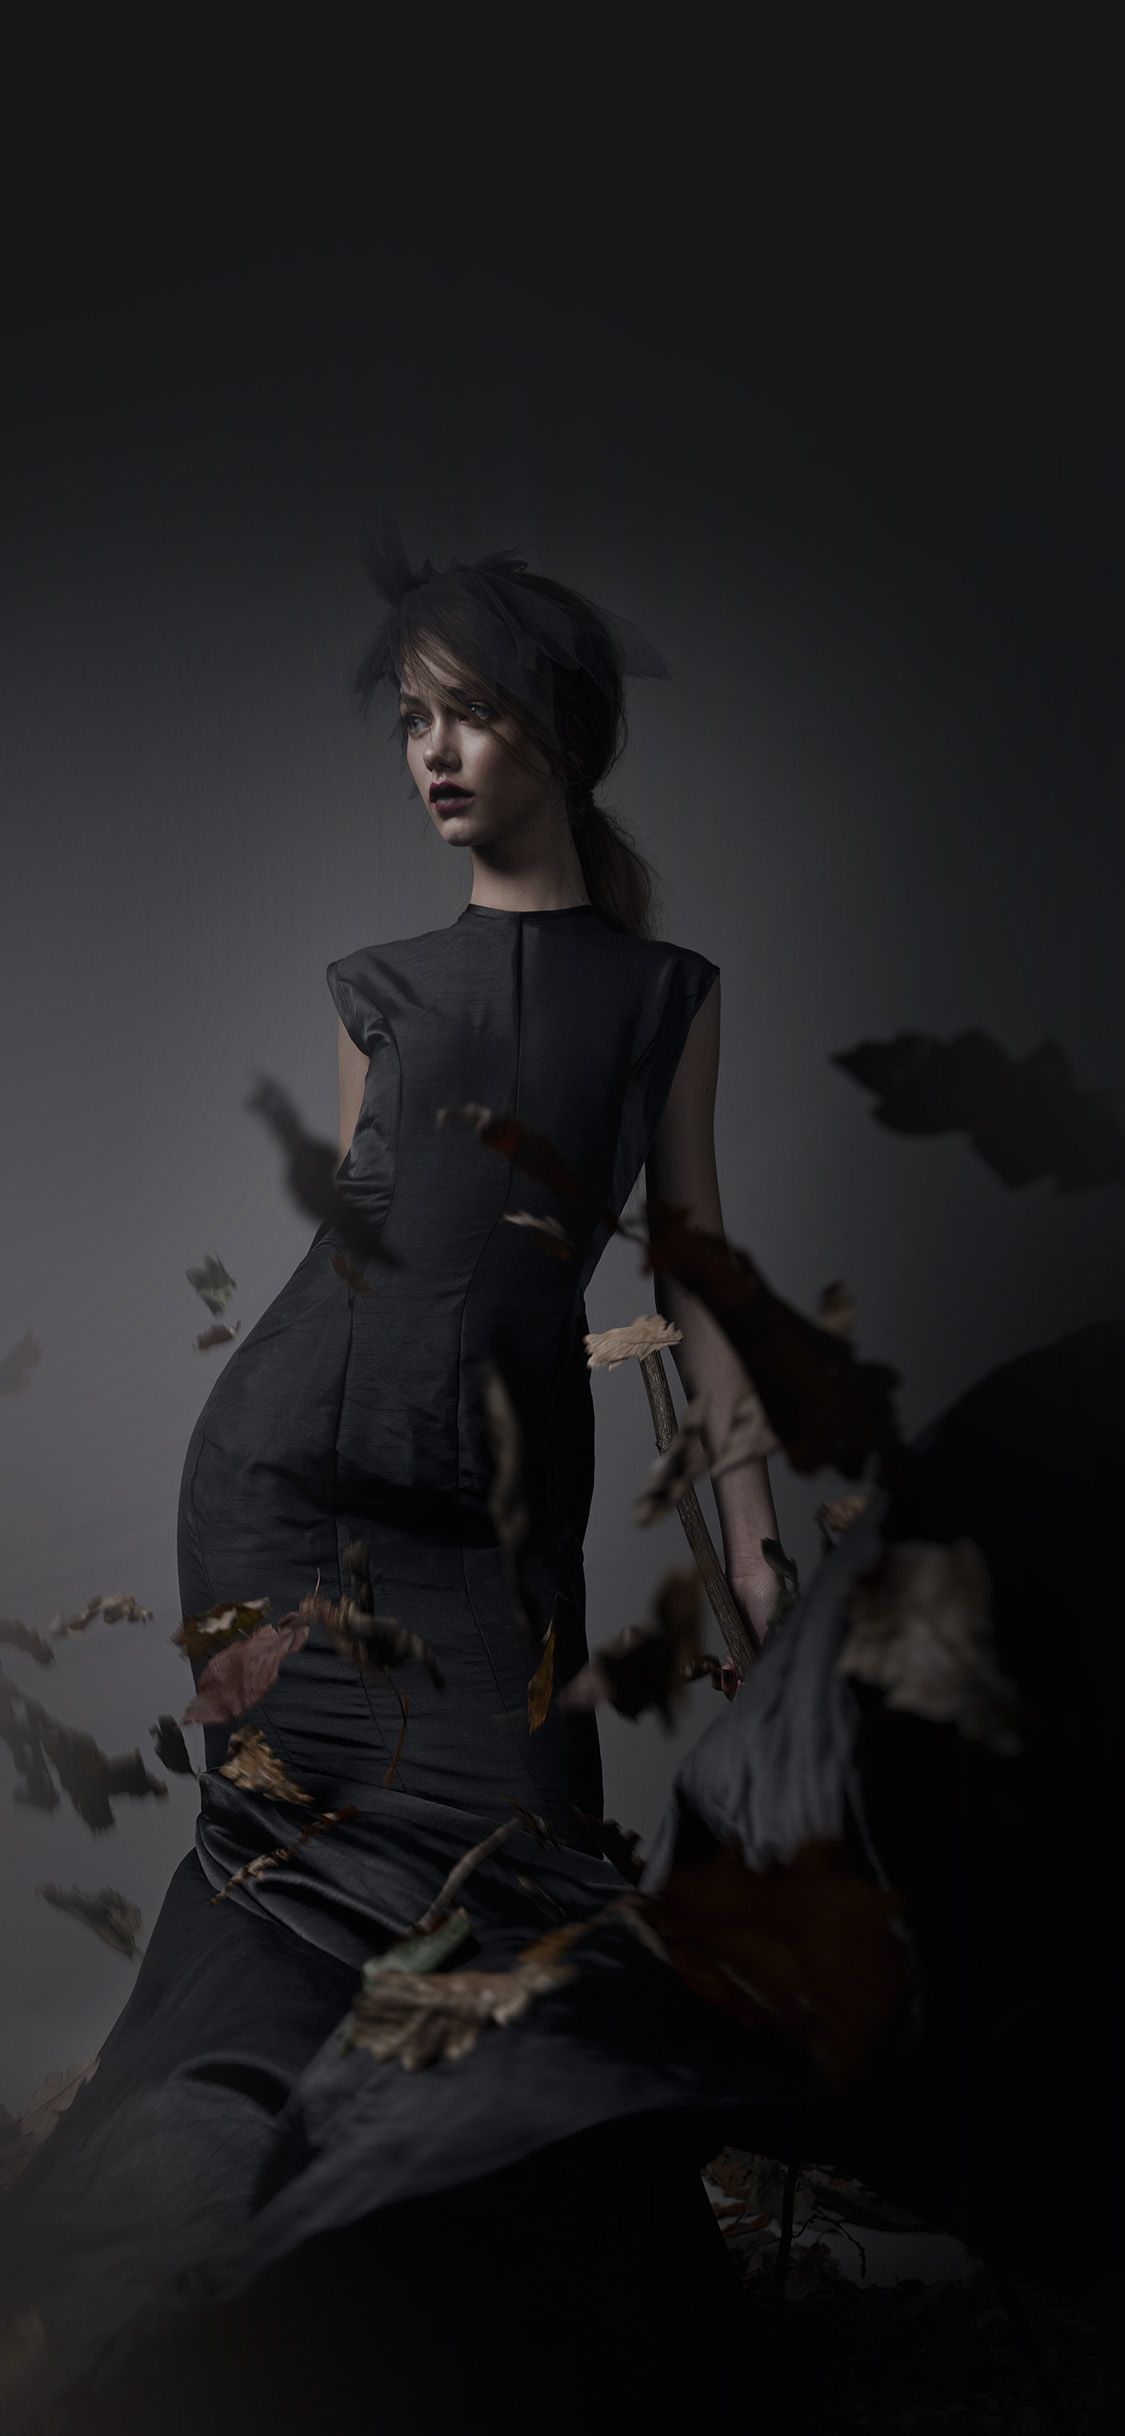 iPhone X wallpaper. girl autumn fall model dark